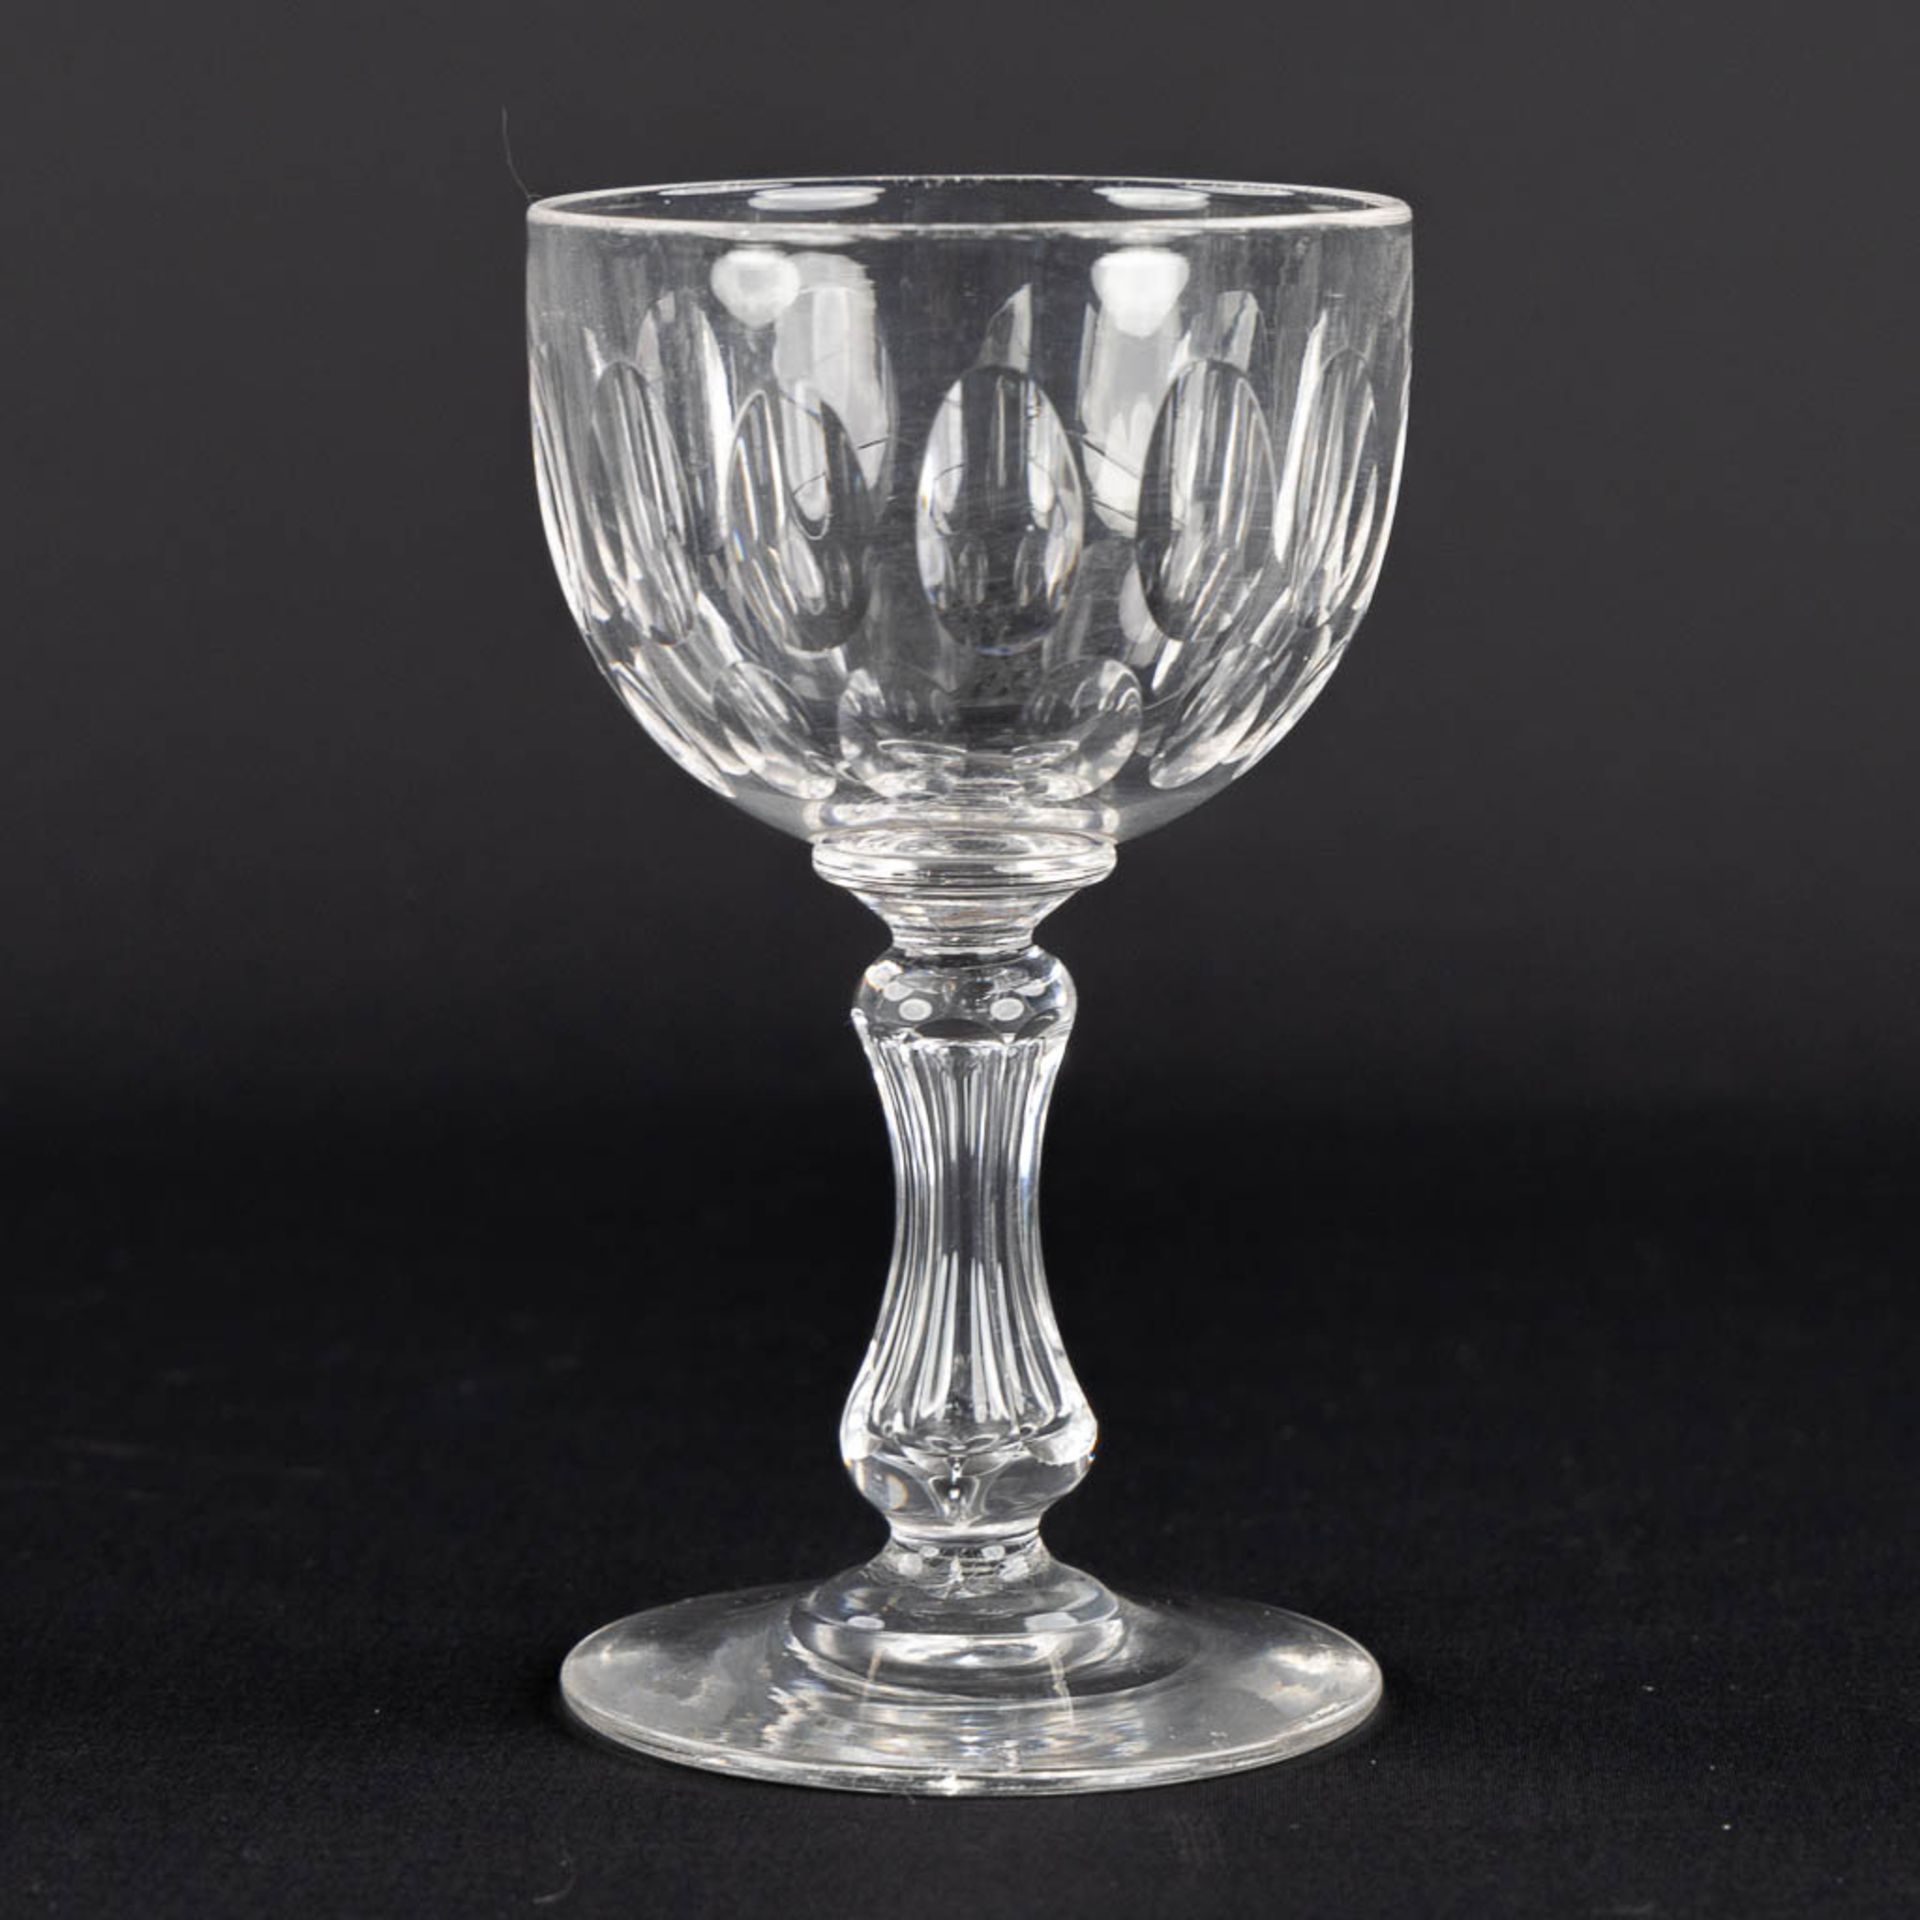 Val Saint Lambert, model Prince De Galles, a set of 24+1 crystal glasses. (H:10,5 x D:9,5 cm) - Image 7 of 8